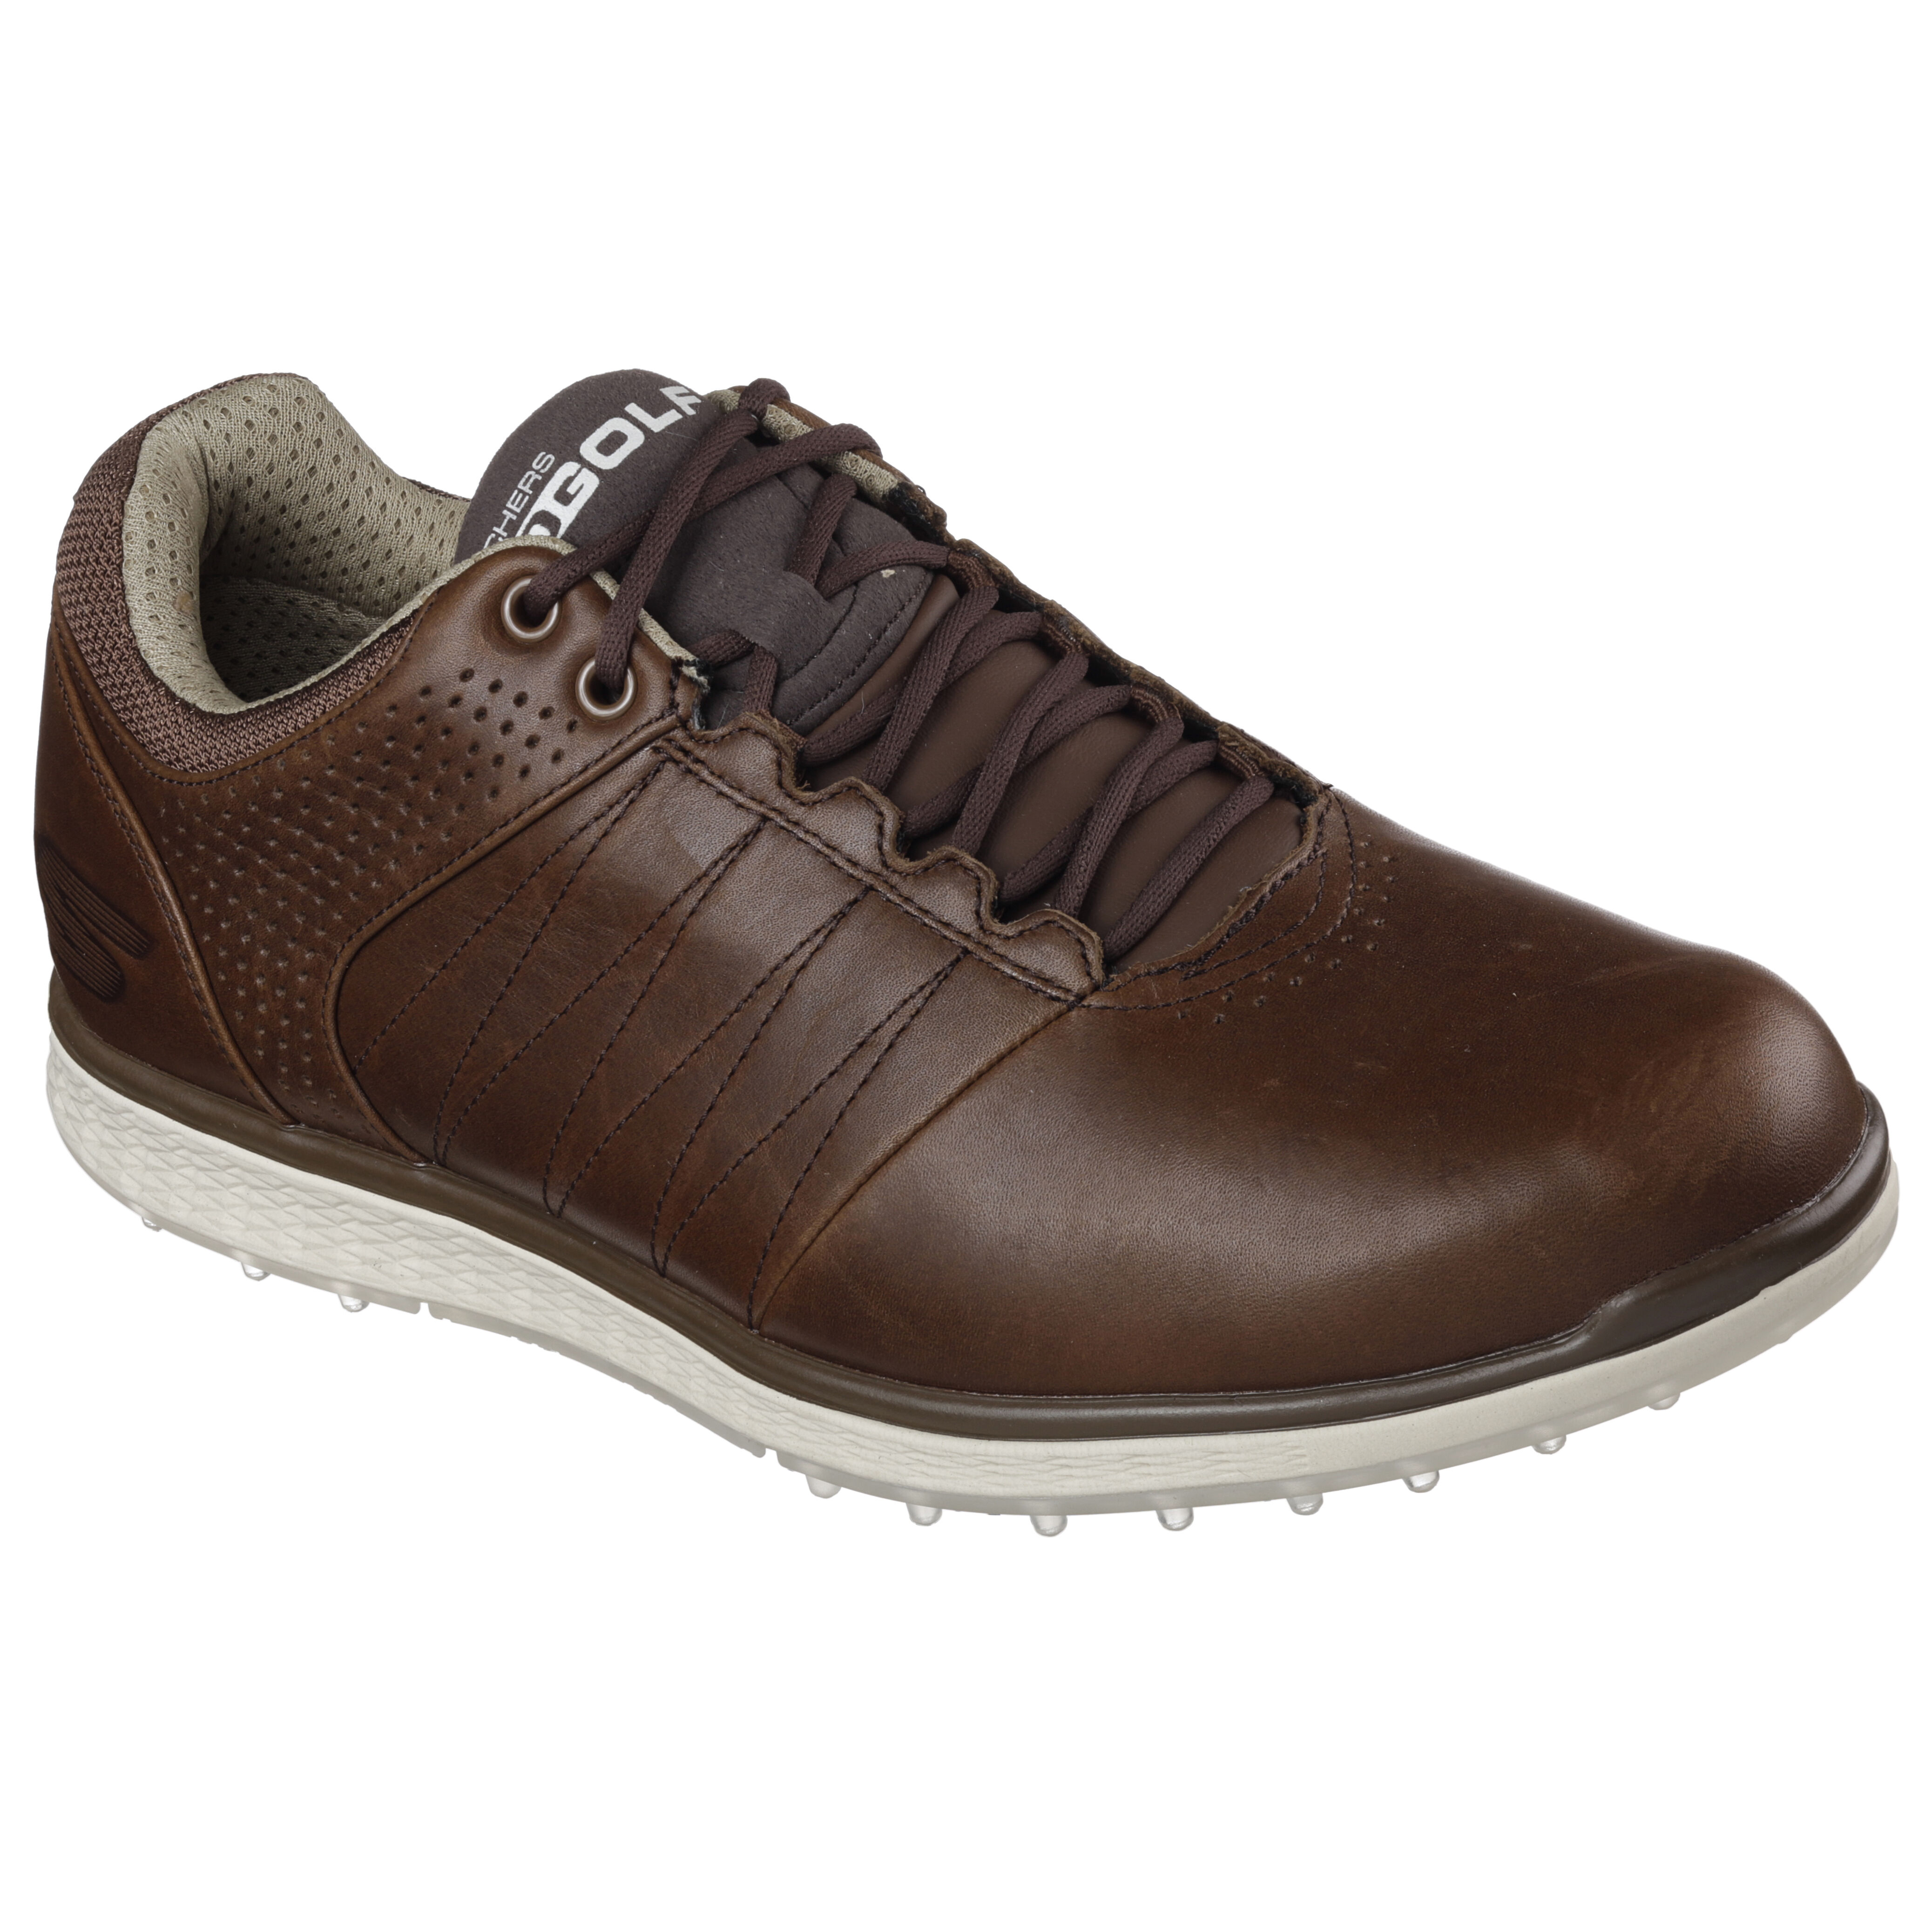 brown skechers golf shoes